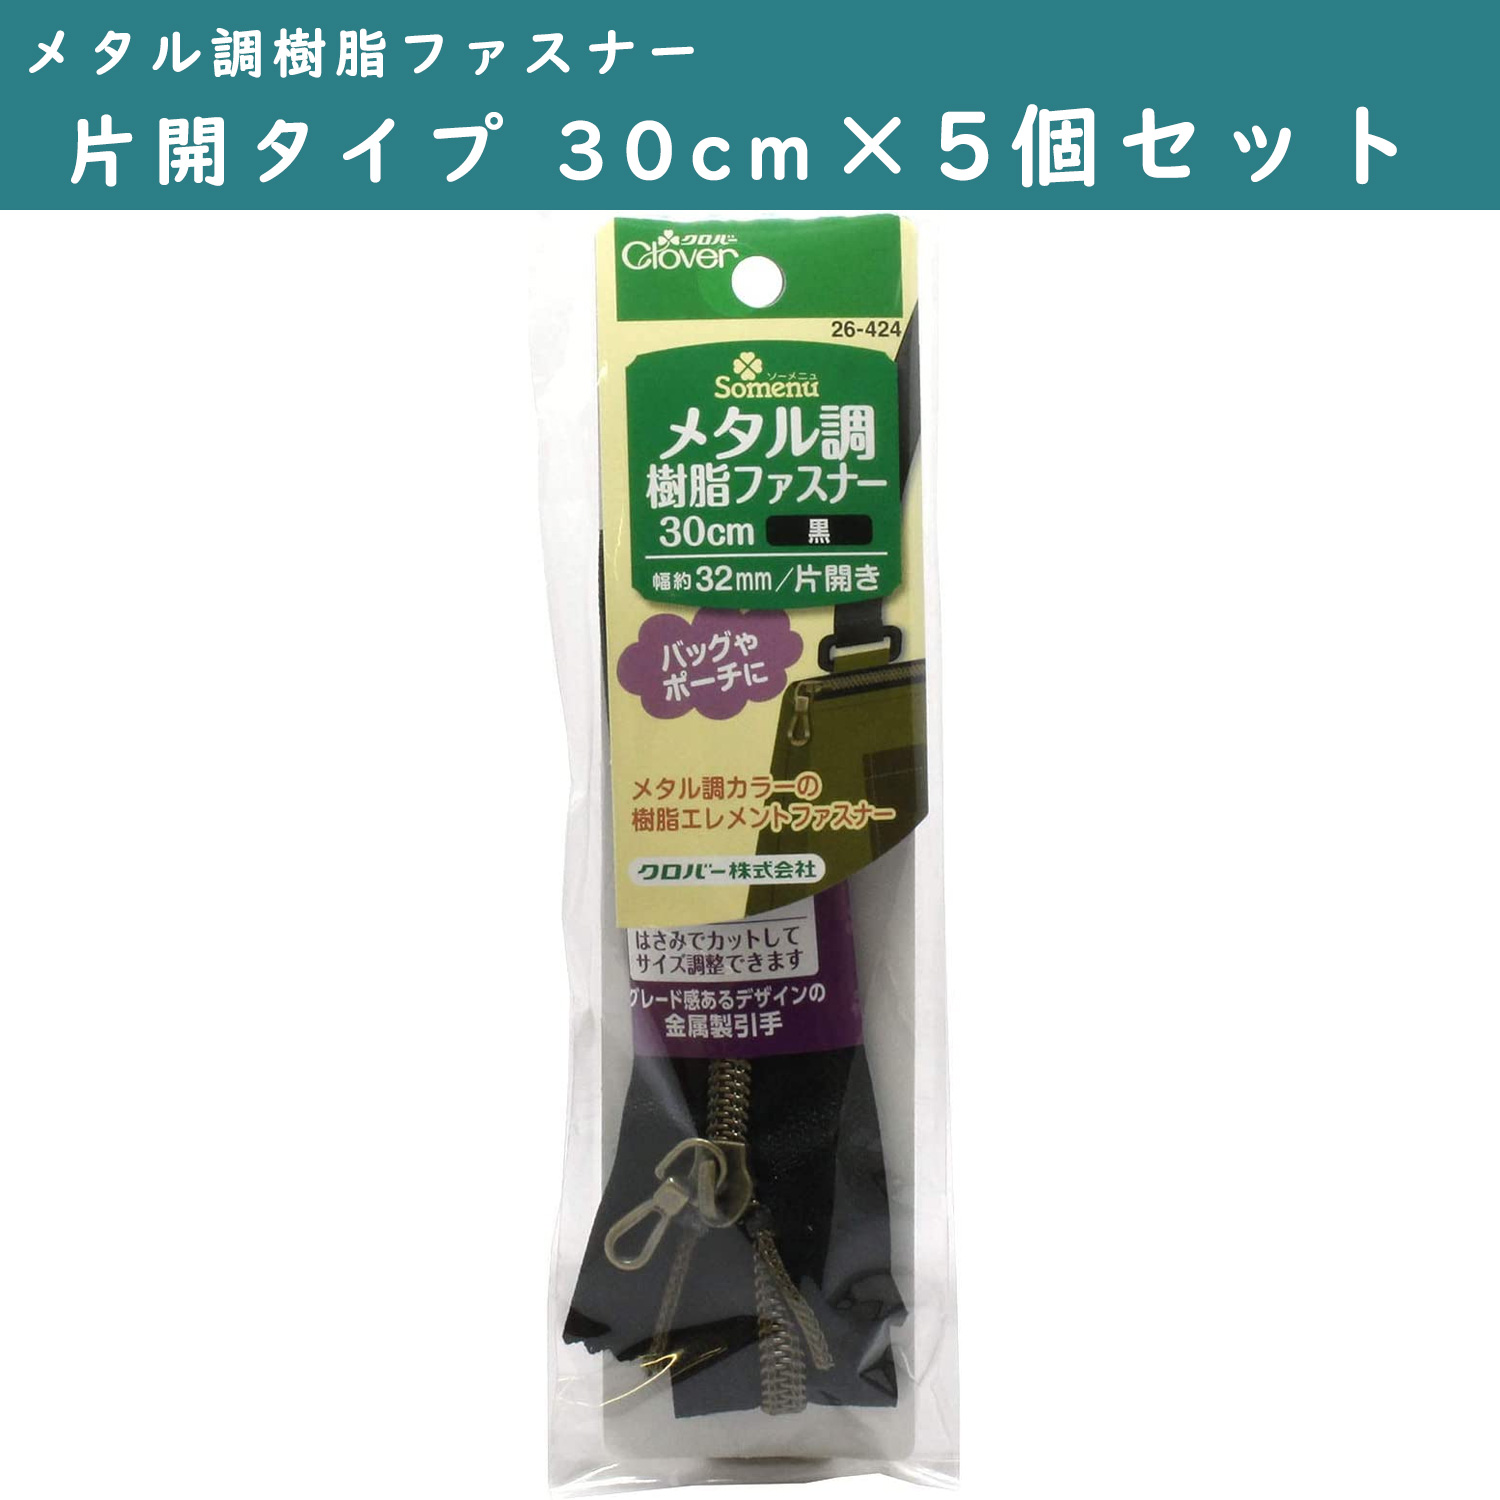 ■CL26-424-5set メタル調樹脂ファスナー 片開タイプ 30cm 黒 5個単位 (セット)